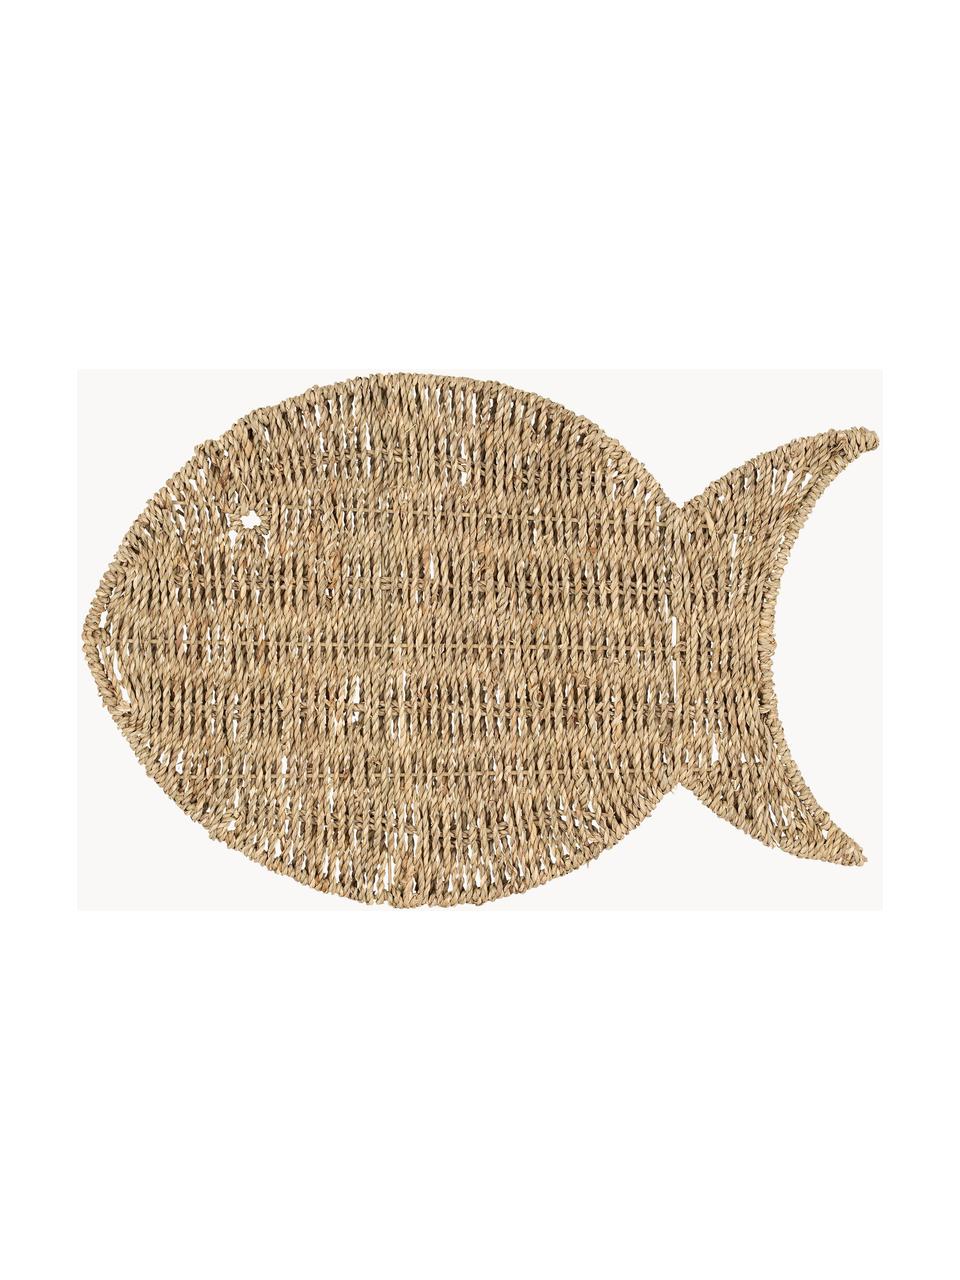 Zeegras placemat Fish in visvorm, Zeegras, Lichtbruin, B 30 x L 45 cm